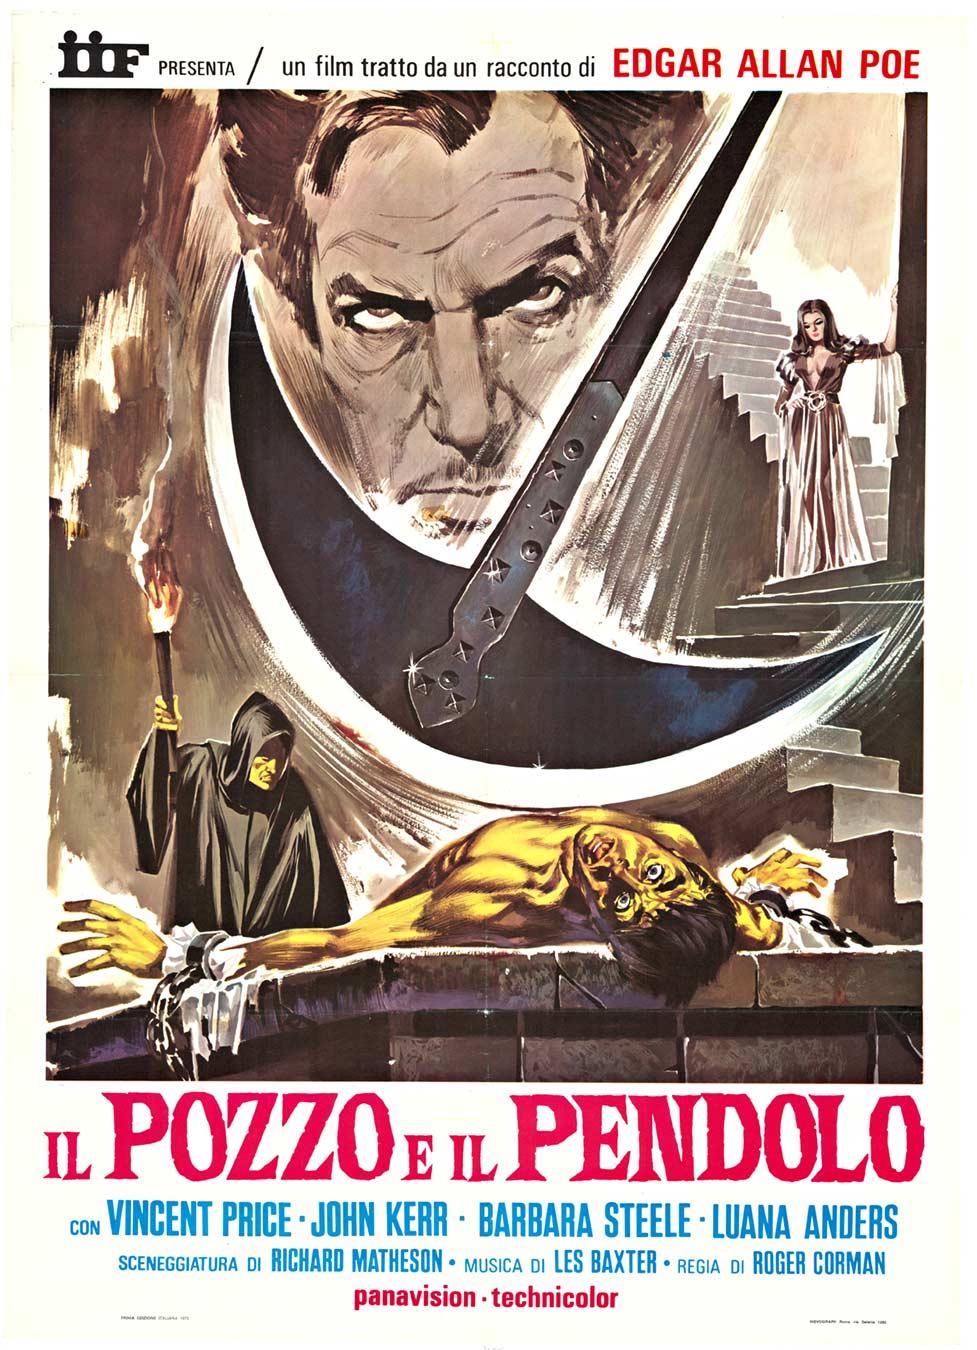 Unknown Interior Print - Original The Pit and the Pendulum vintage Italian movie poster